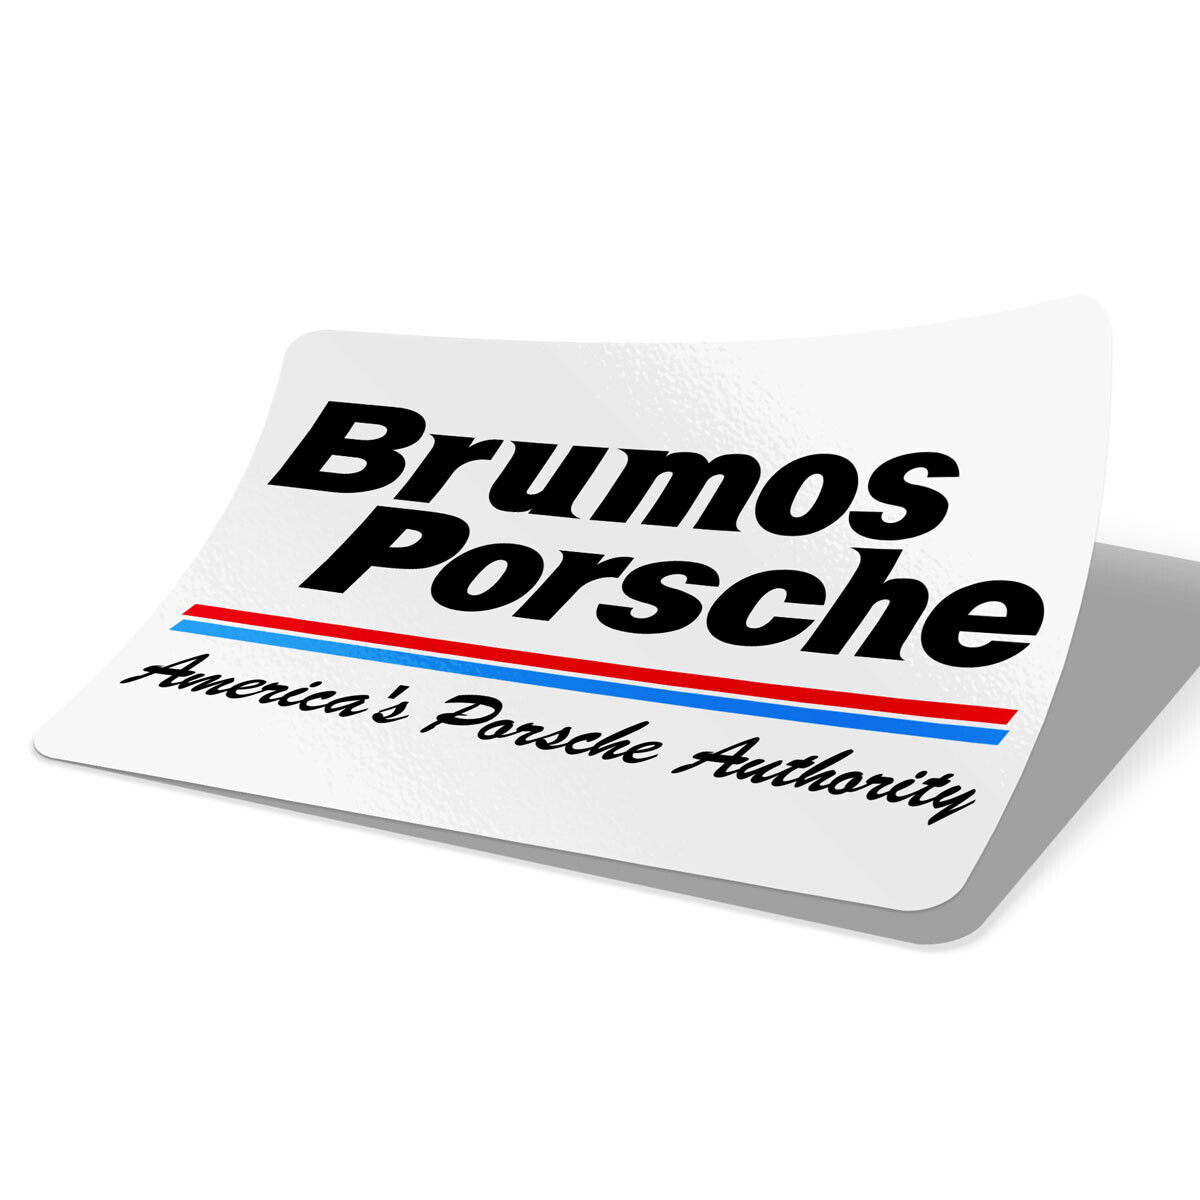 Brumos Porsche American's Porsche Authority Vintage IMSA Racing Sticker Decal